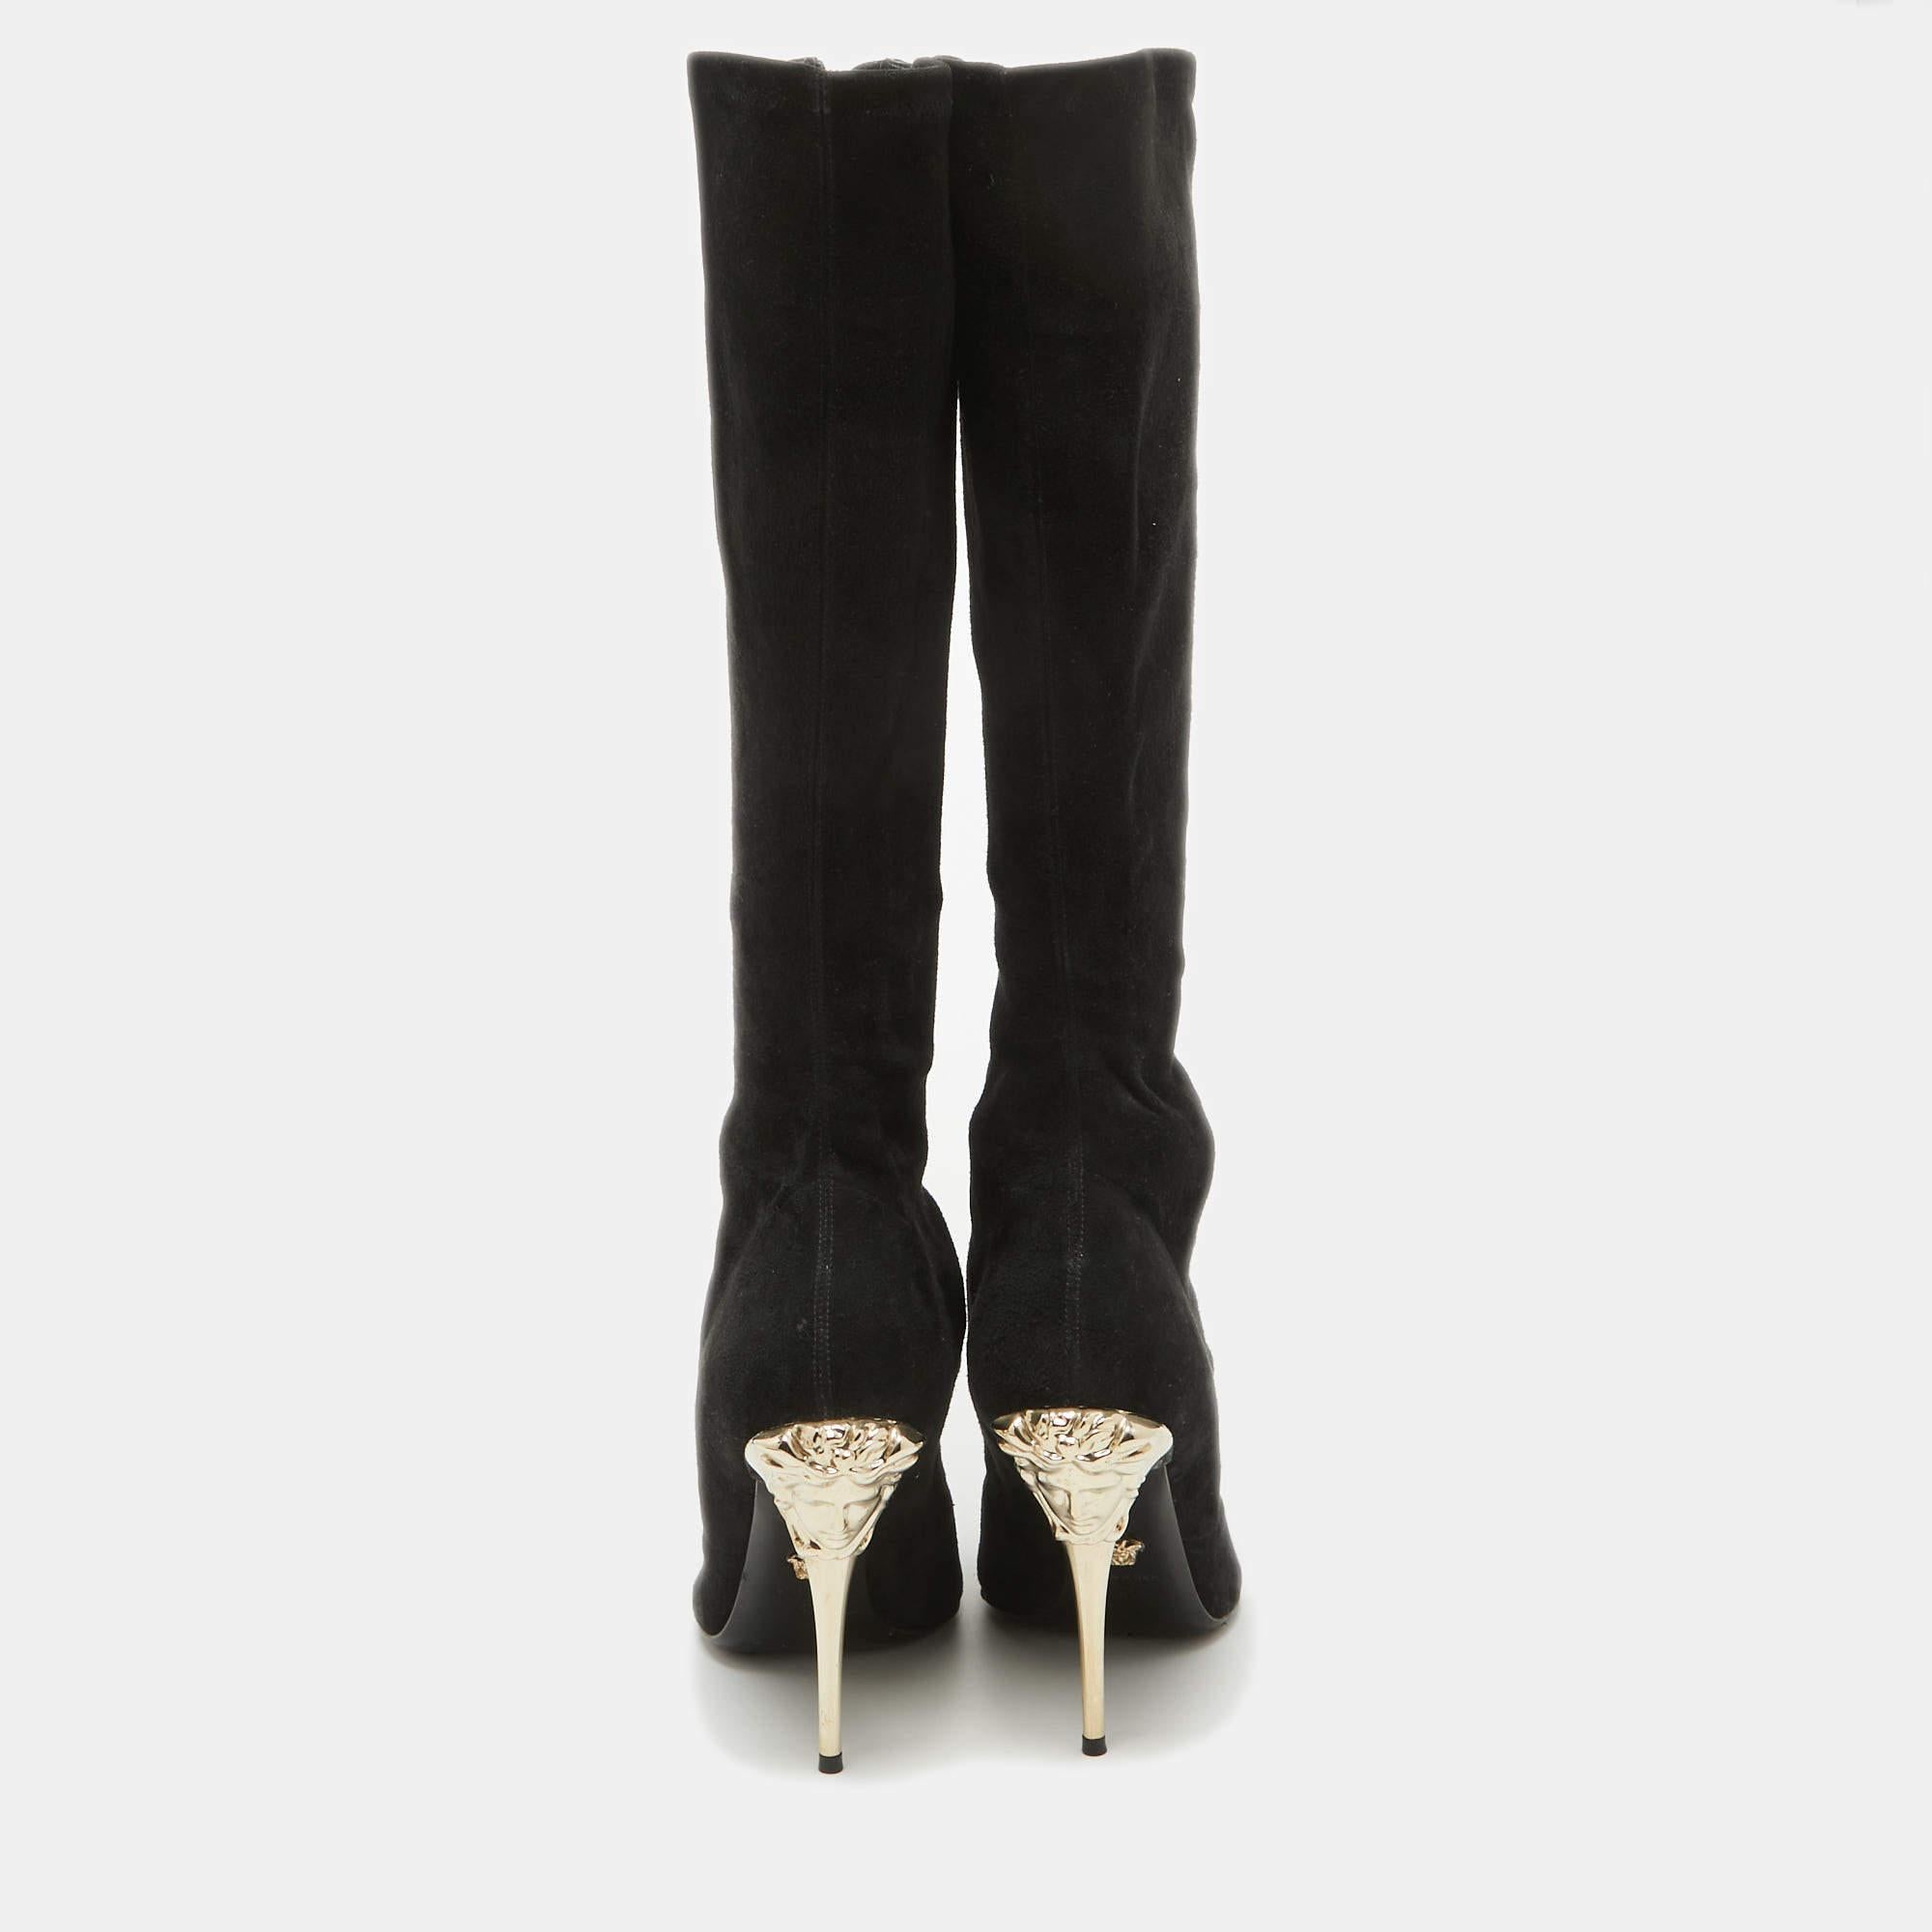 Versace Black Suede Open Toe Knee Length Boots Size 41 2